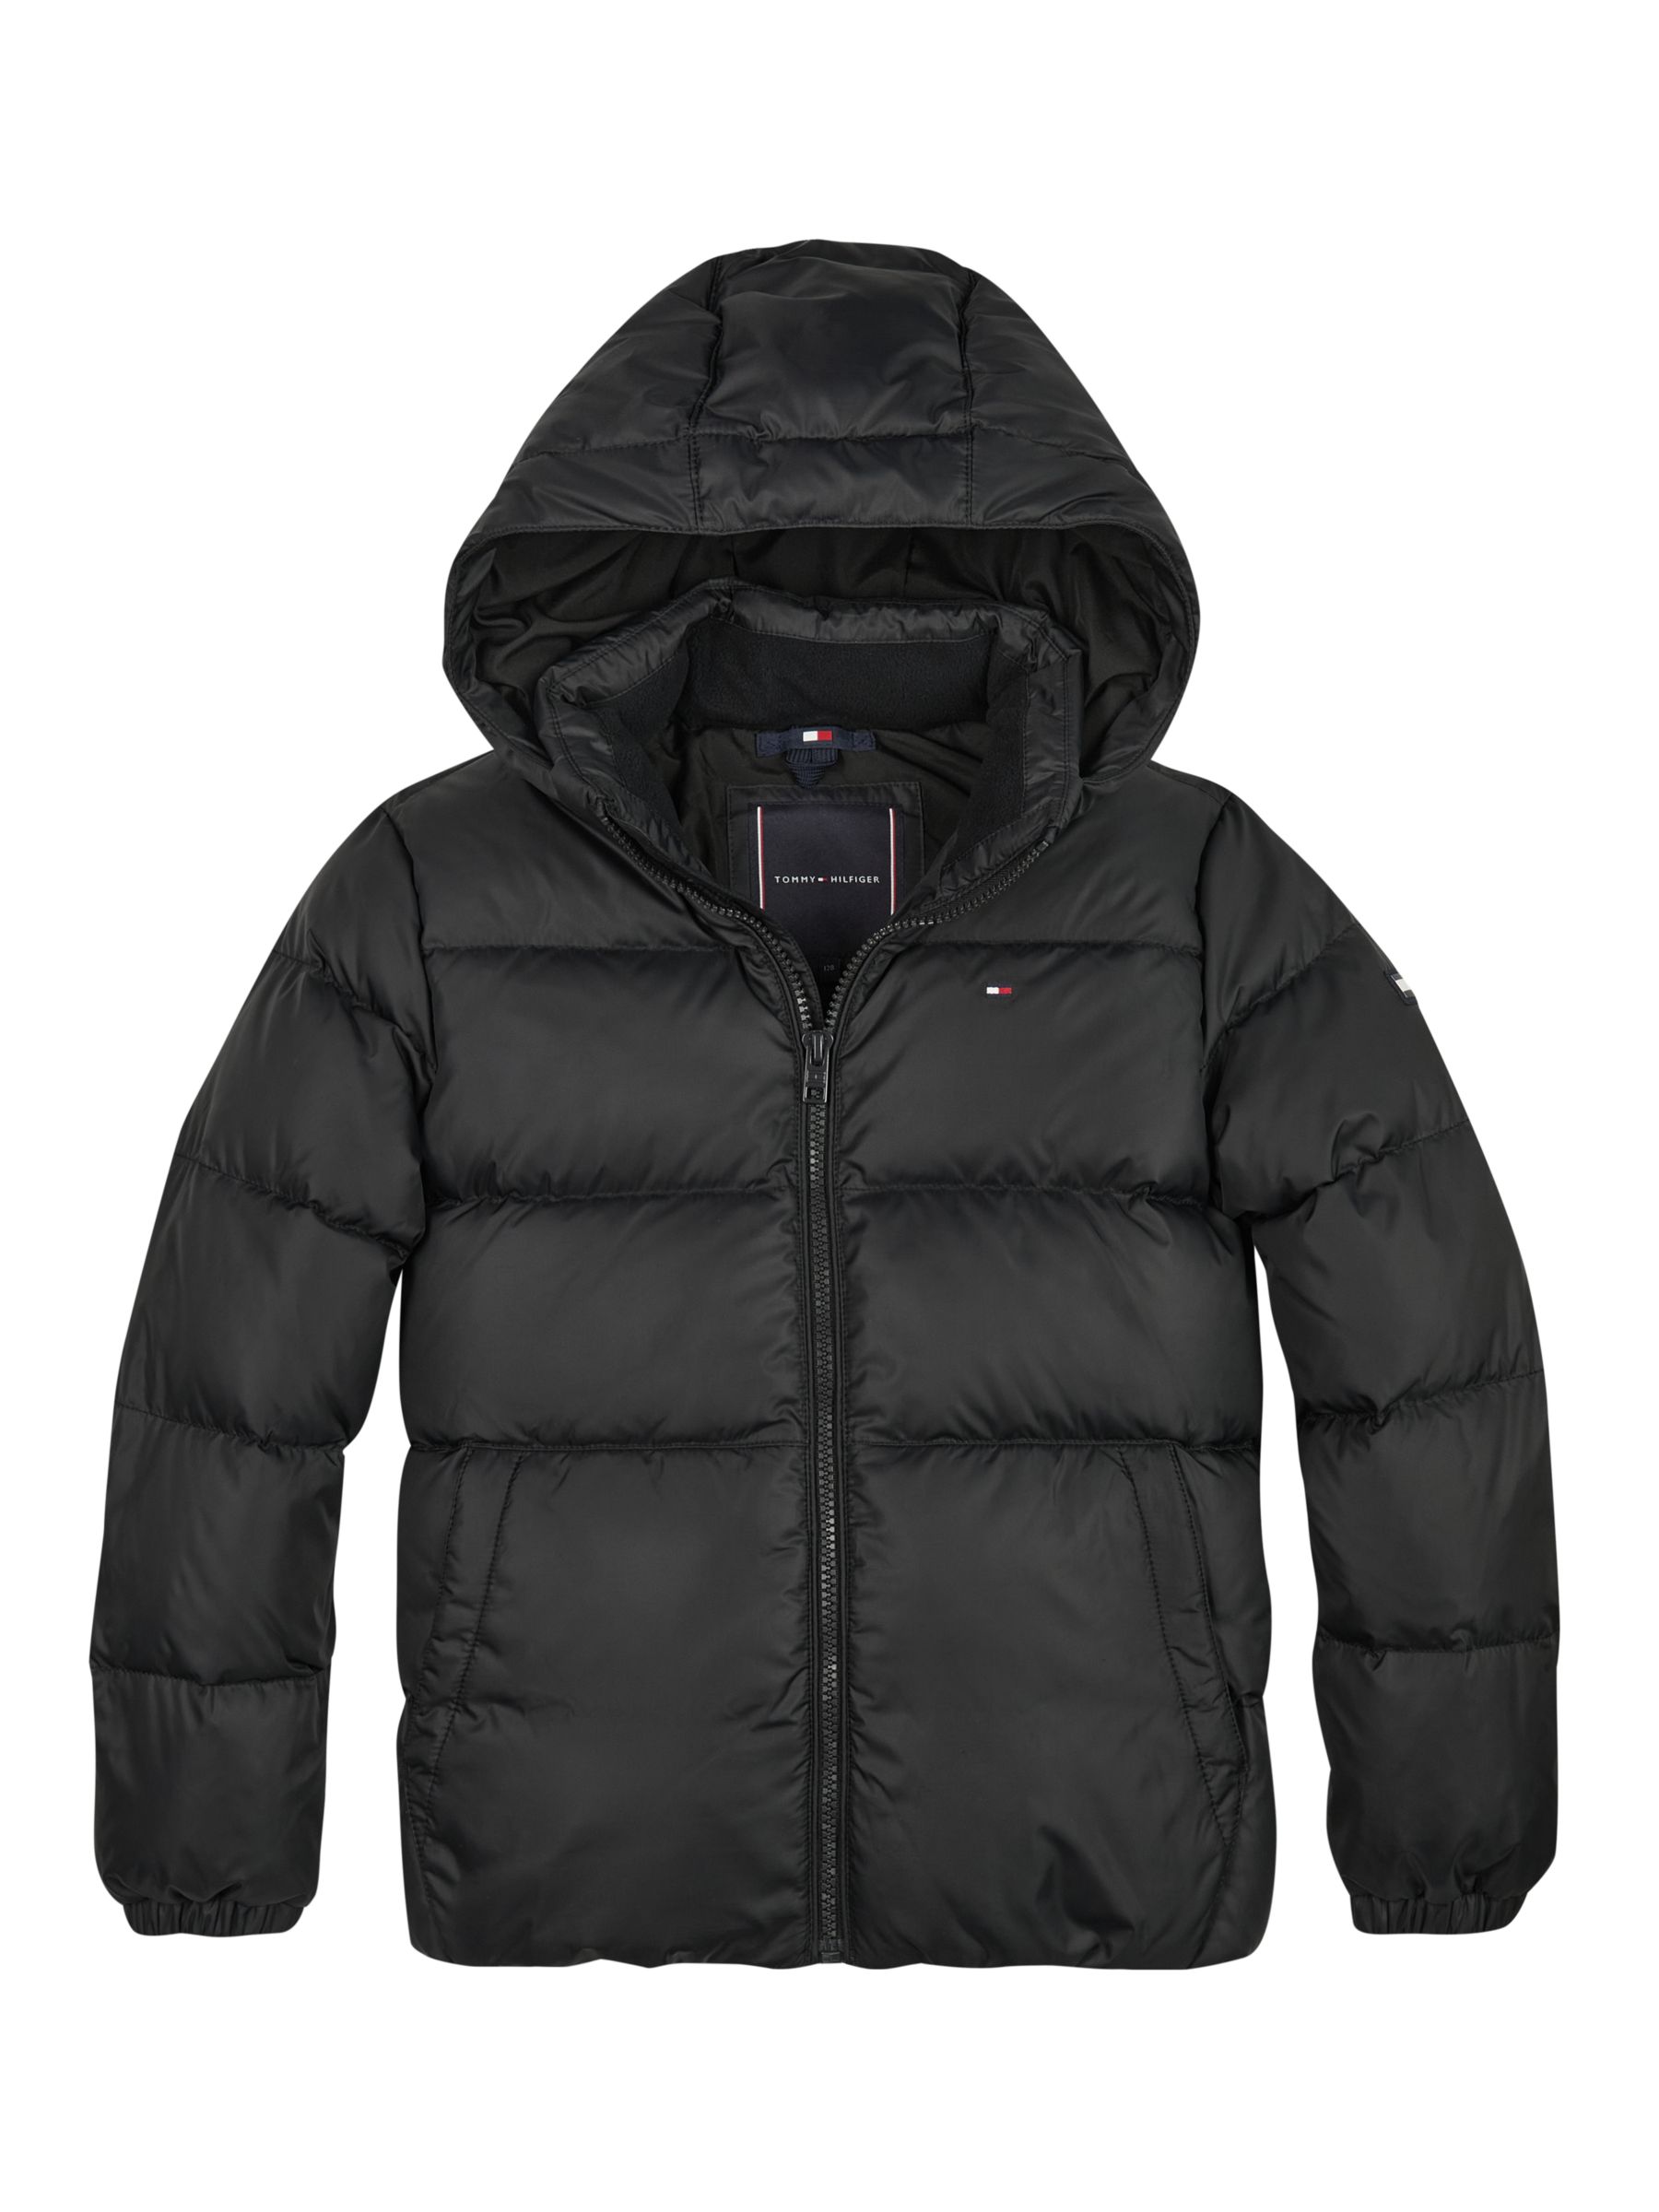 Tommy Hilfiger Kids' Essential Down Jacket, Black at John Lewis & Partners